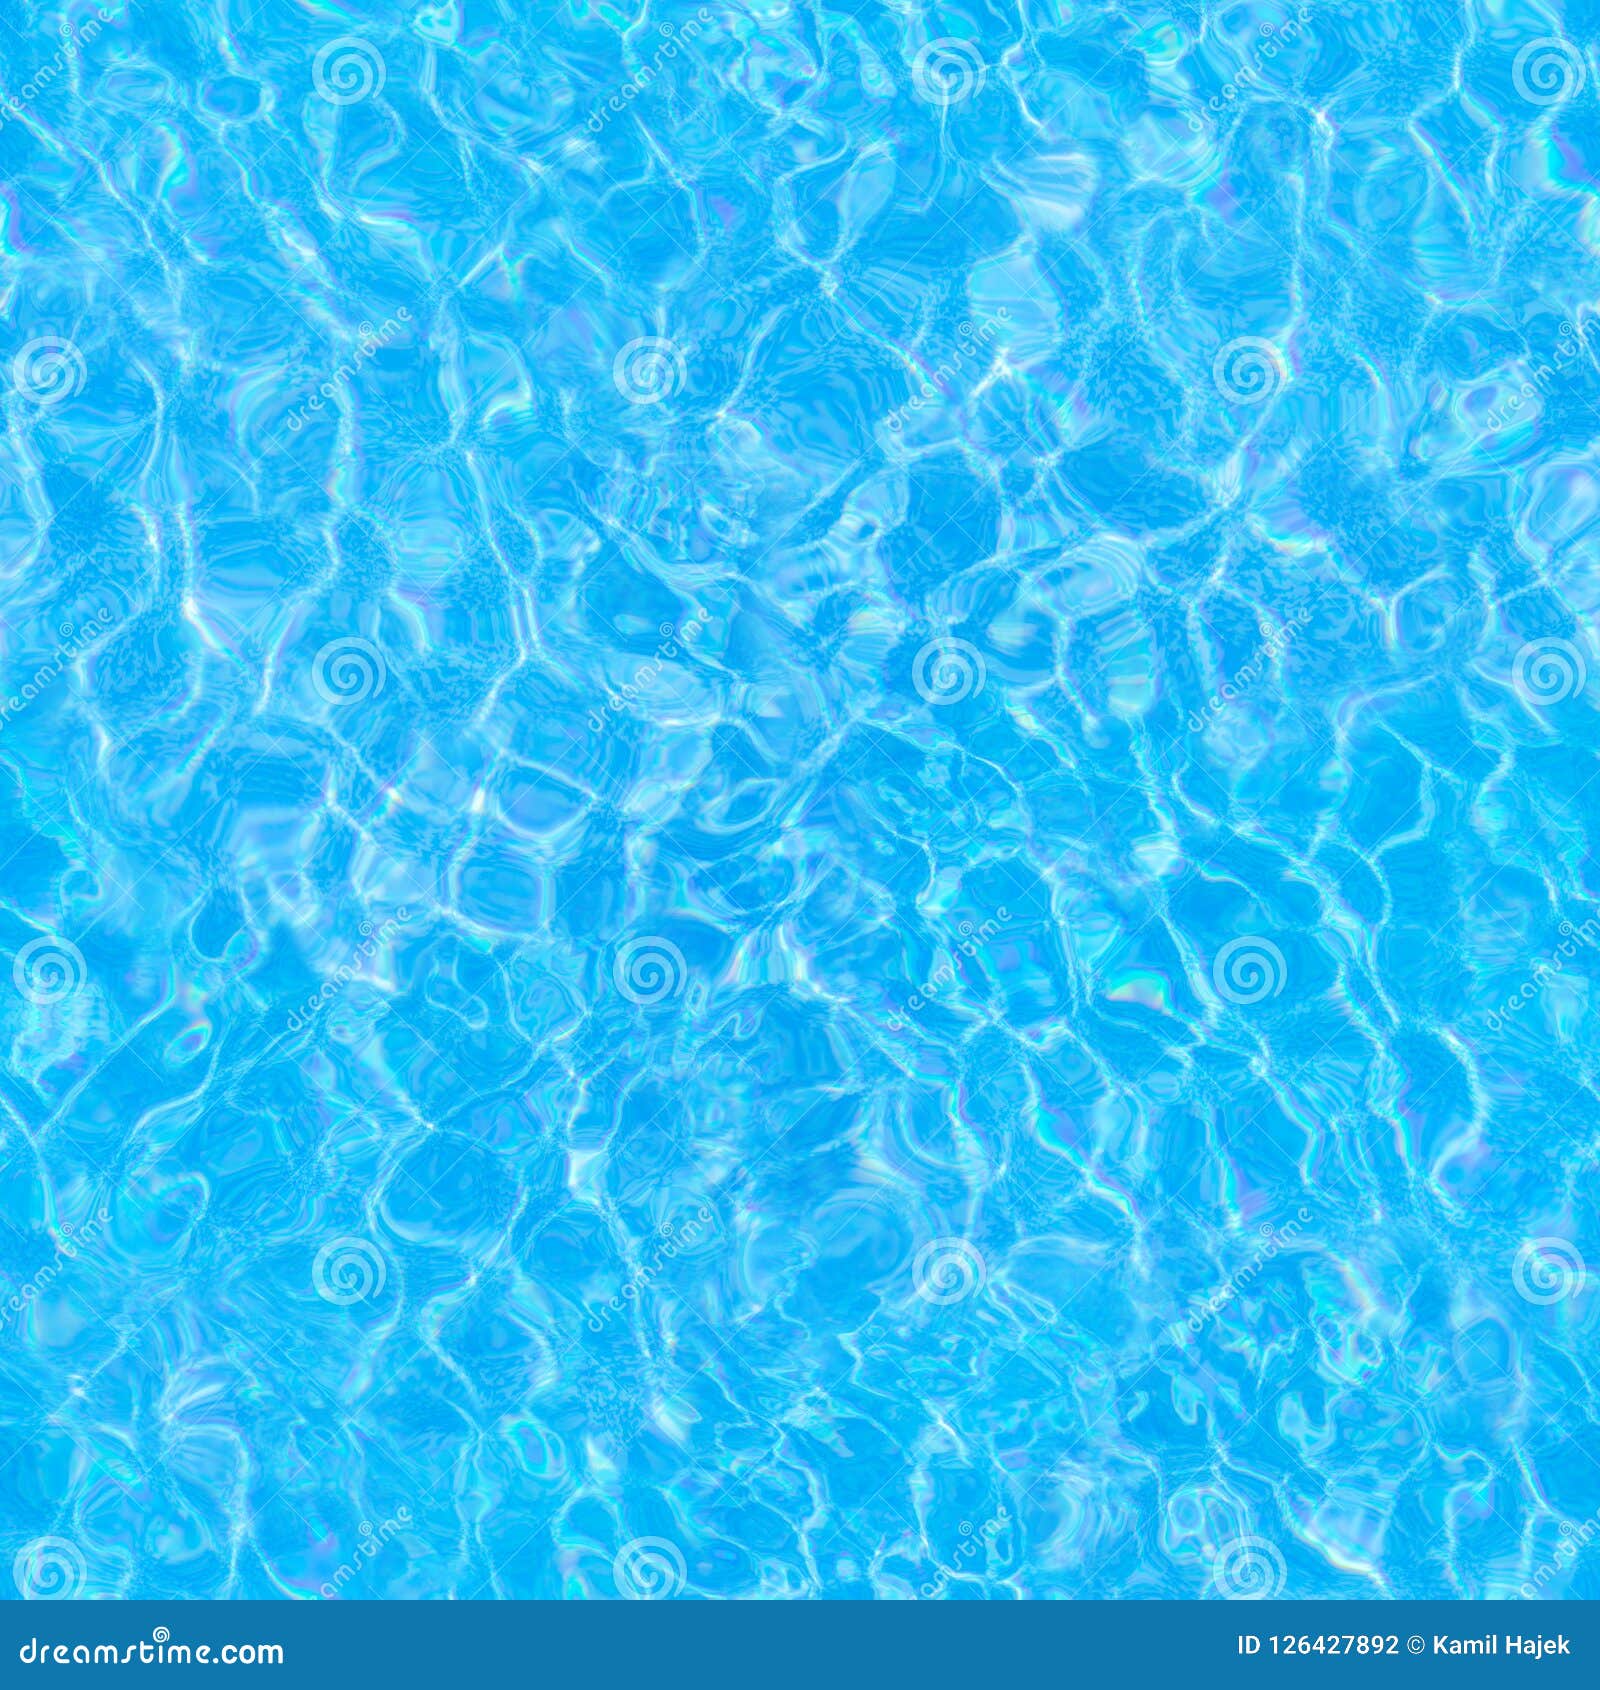 seamless pool water refraction pattern